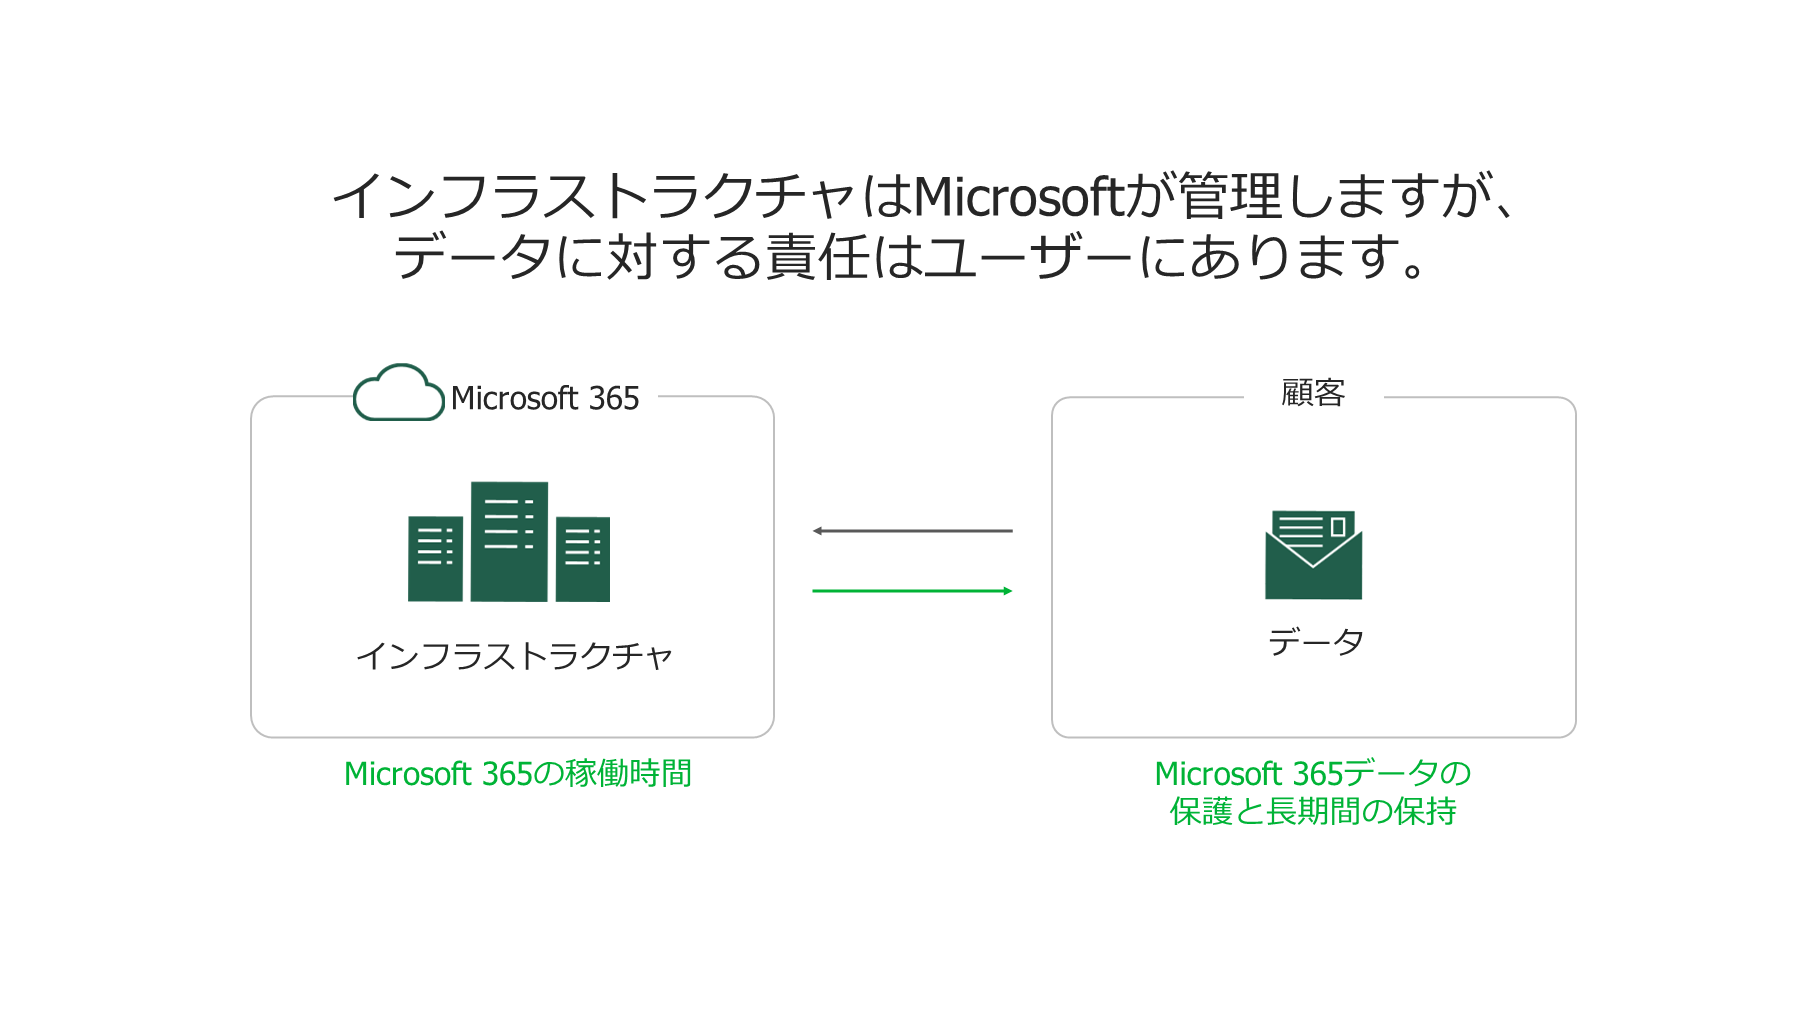 Backup microsoft 365 diagram jp